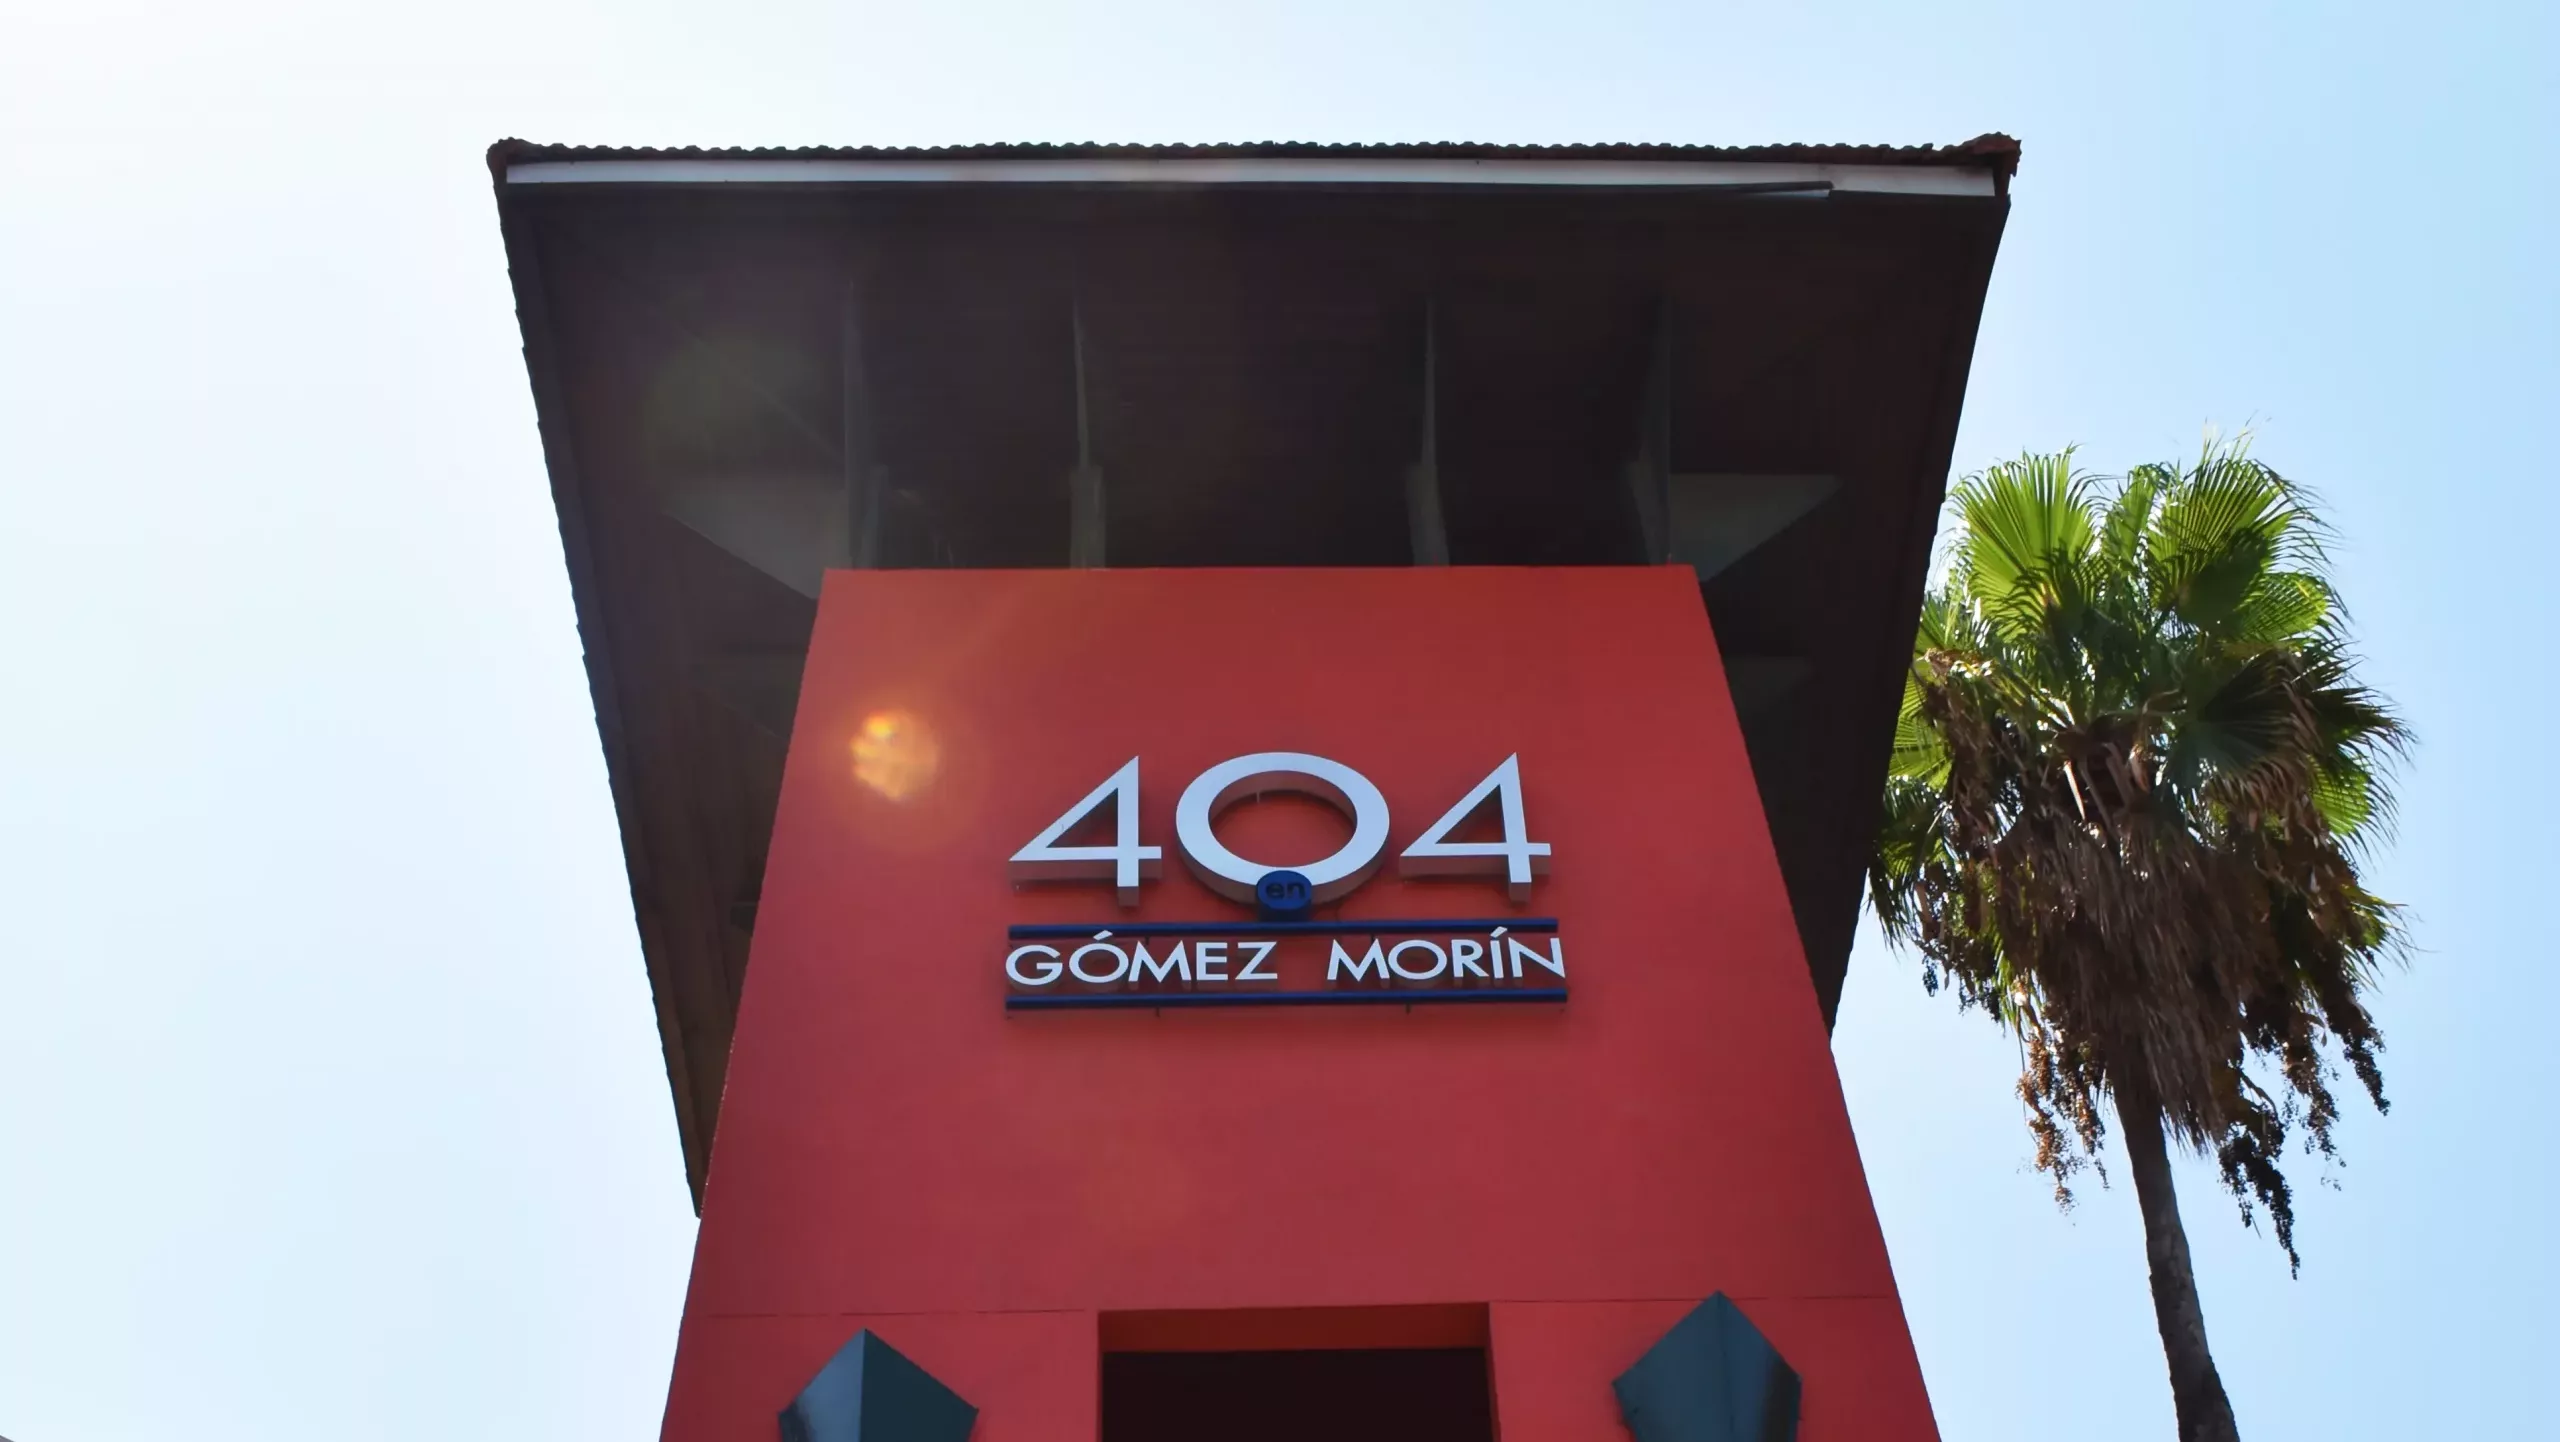 Plaza Comercial 404 en Gómez Morin, un proyecto de Terra Regia